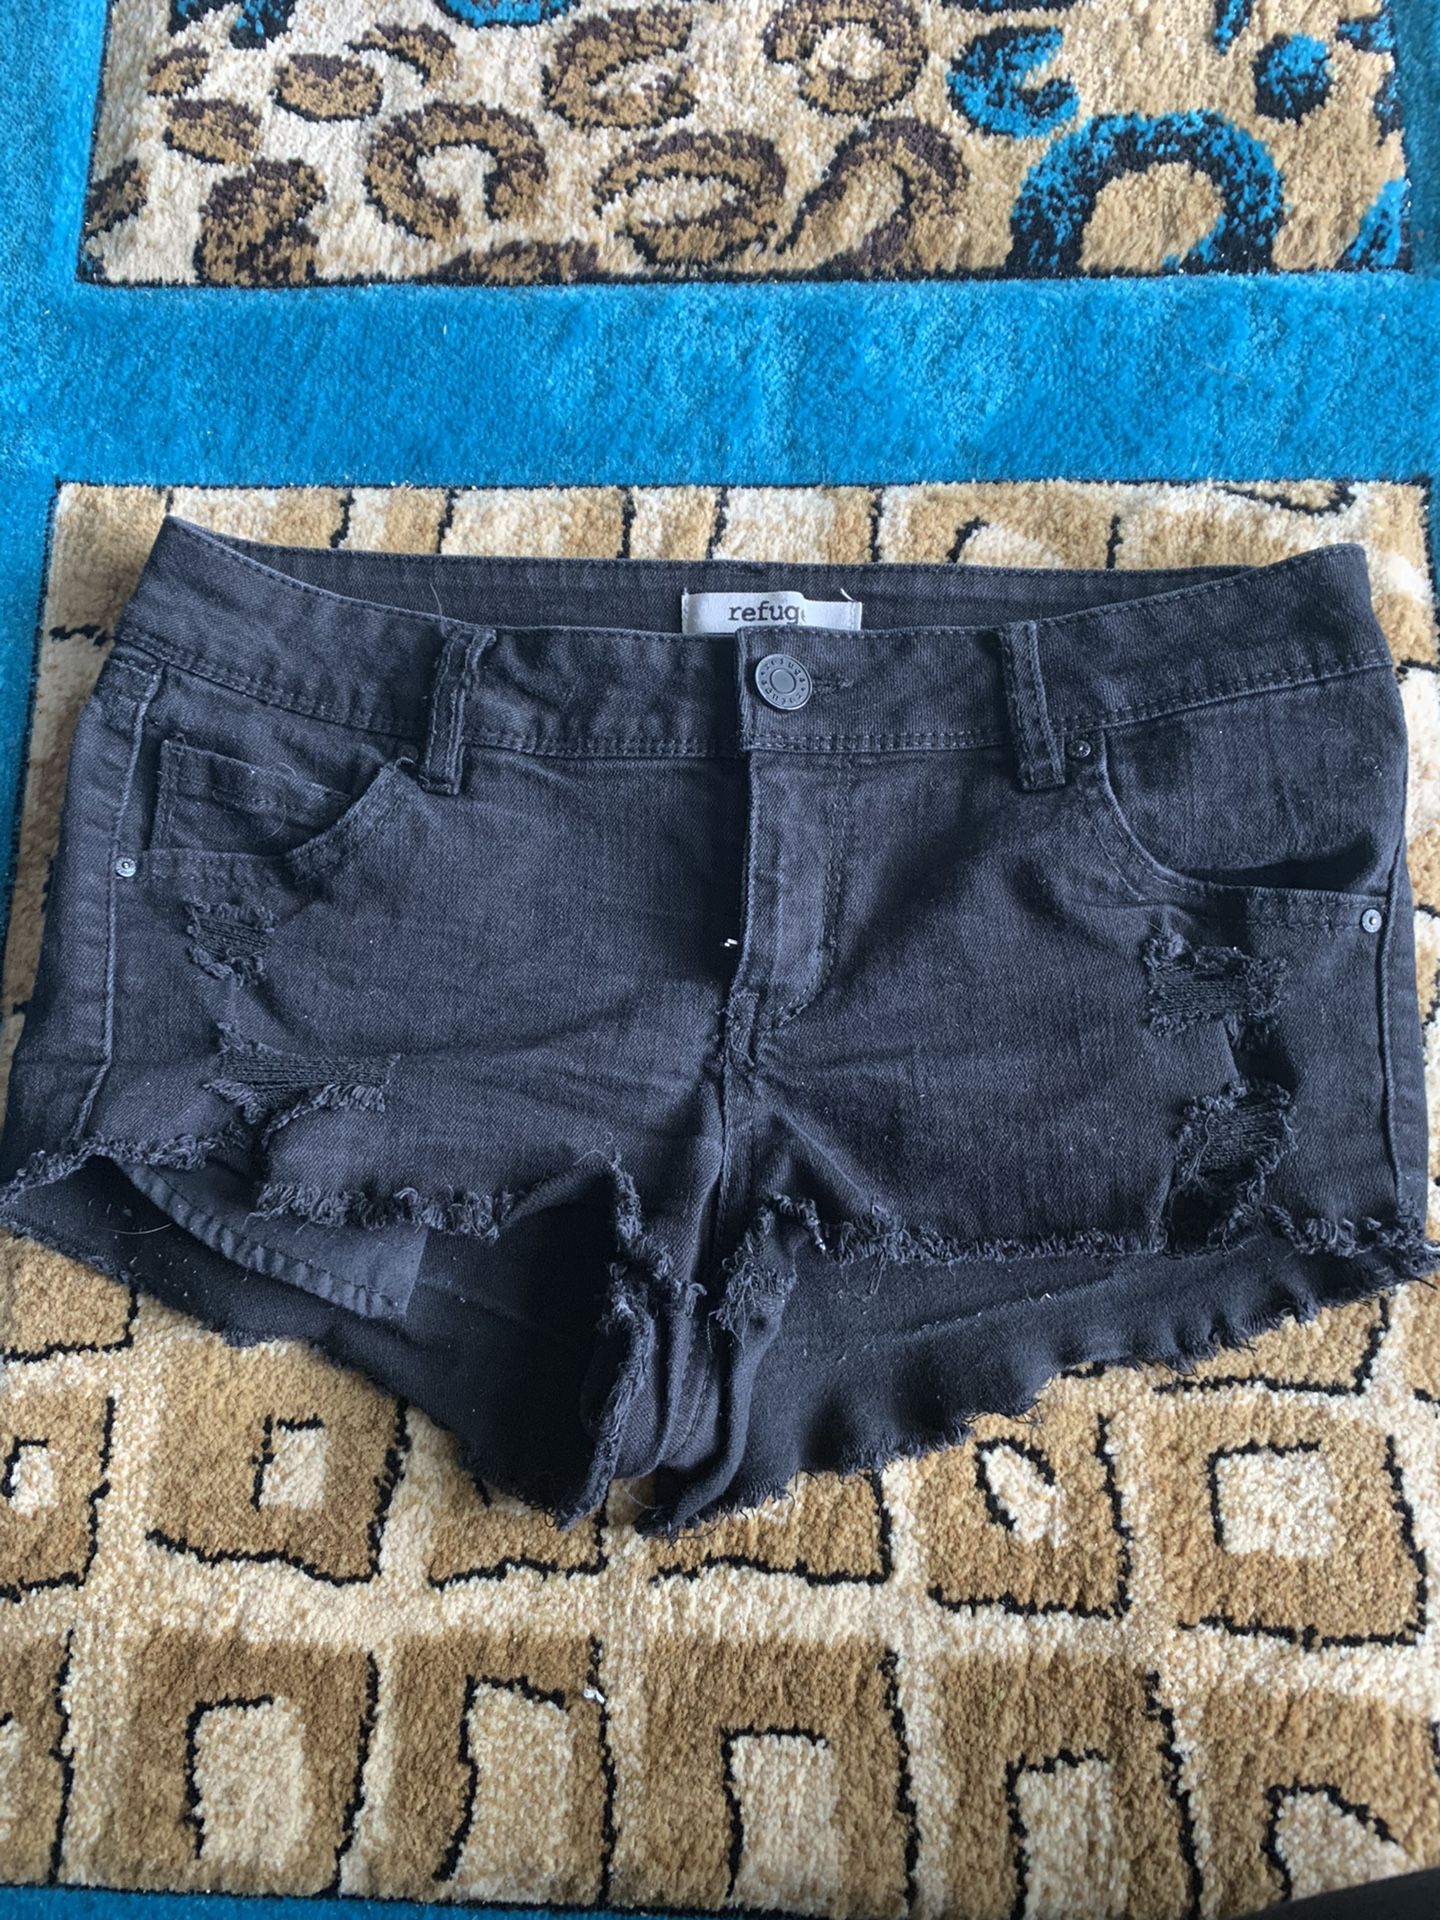 Black Booty Shorts